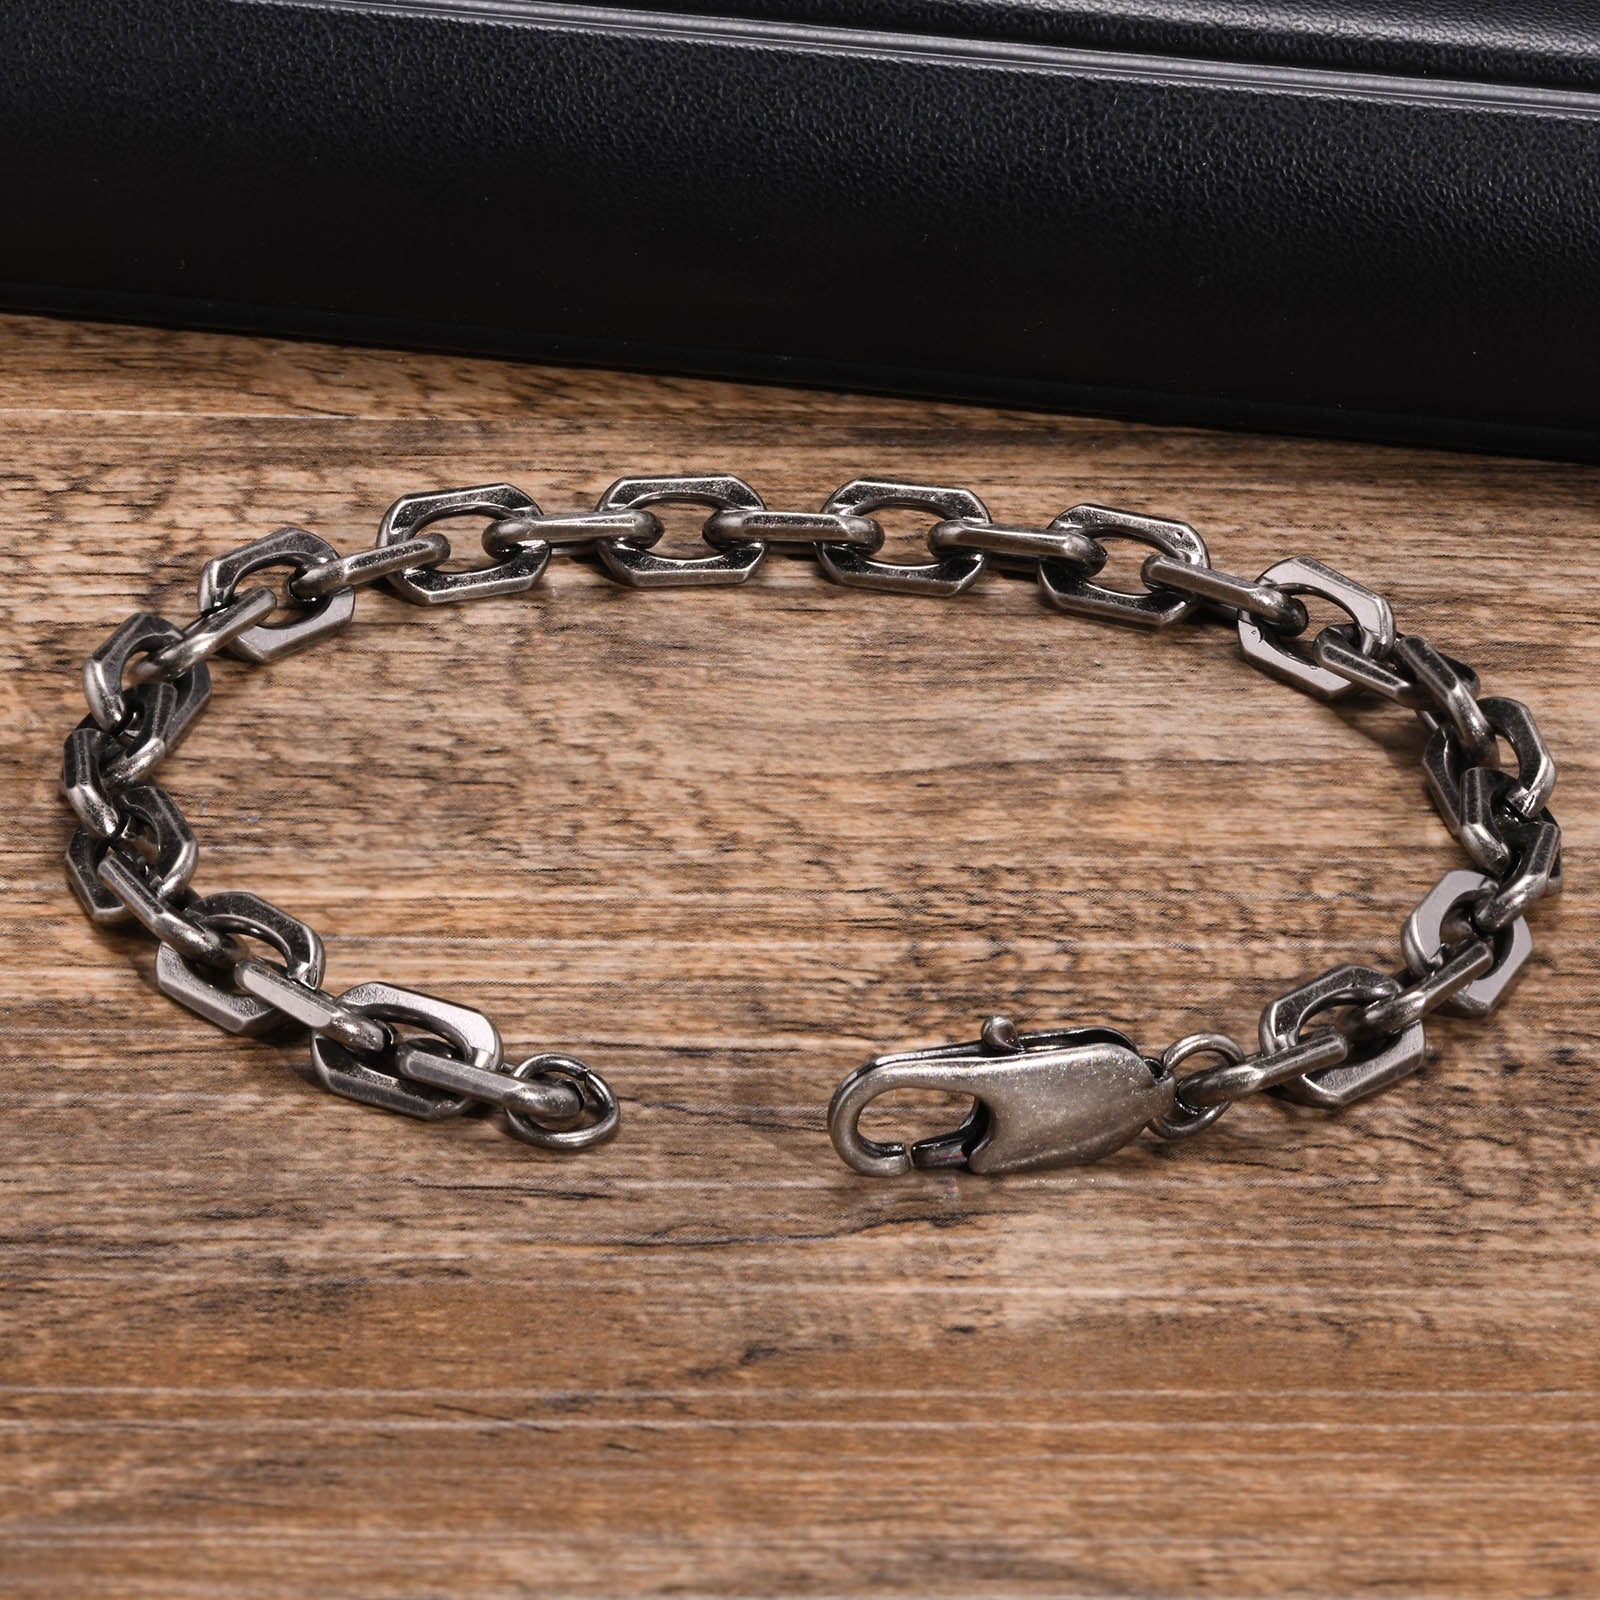 Adrín Rolo Chain Bracelet - BERML BY DESIGN JEWELRY FOR MEN